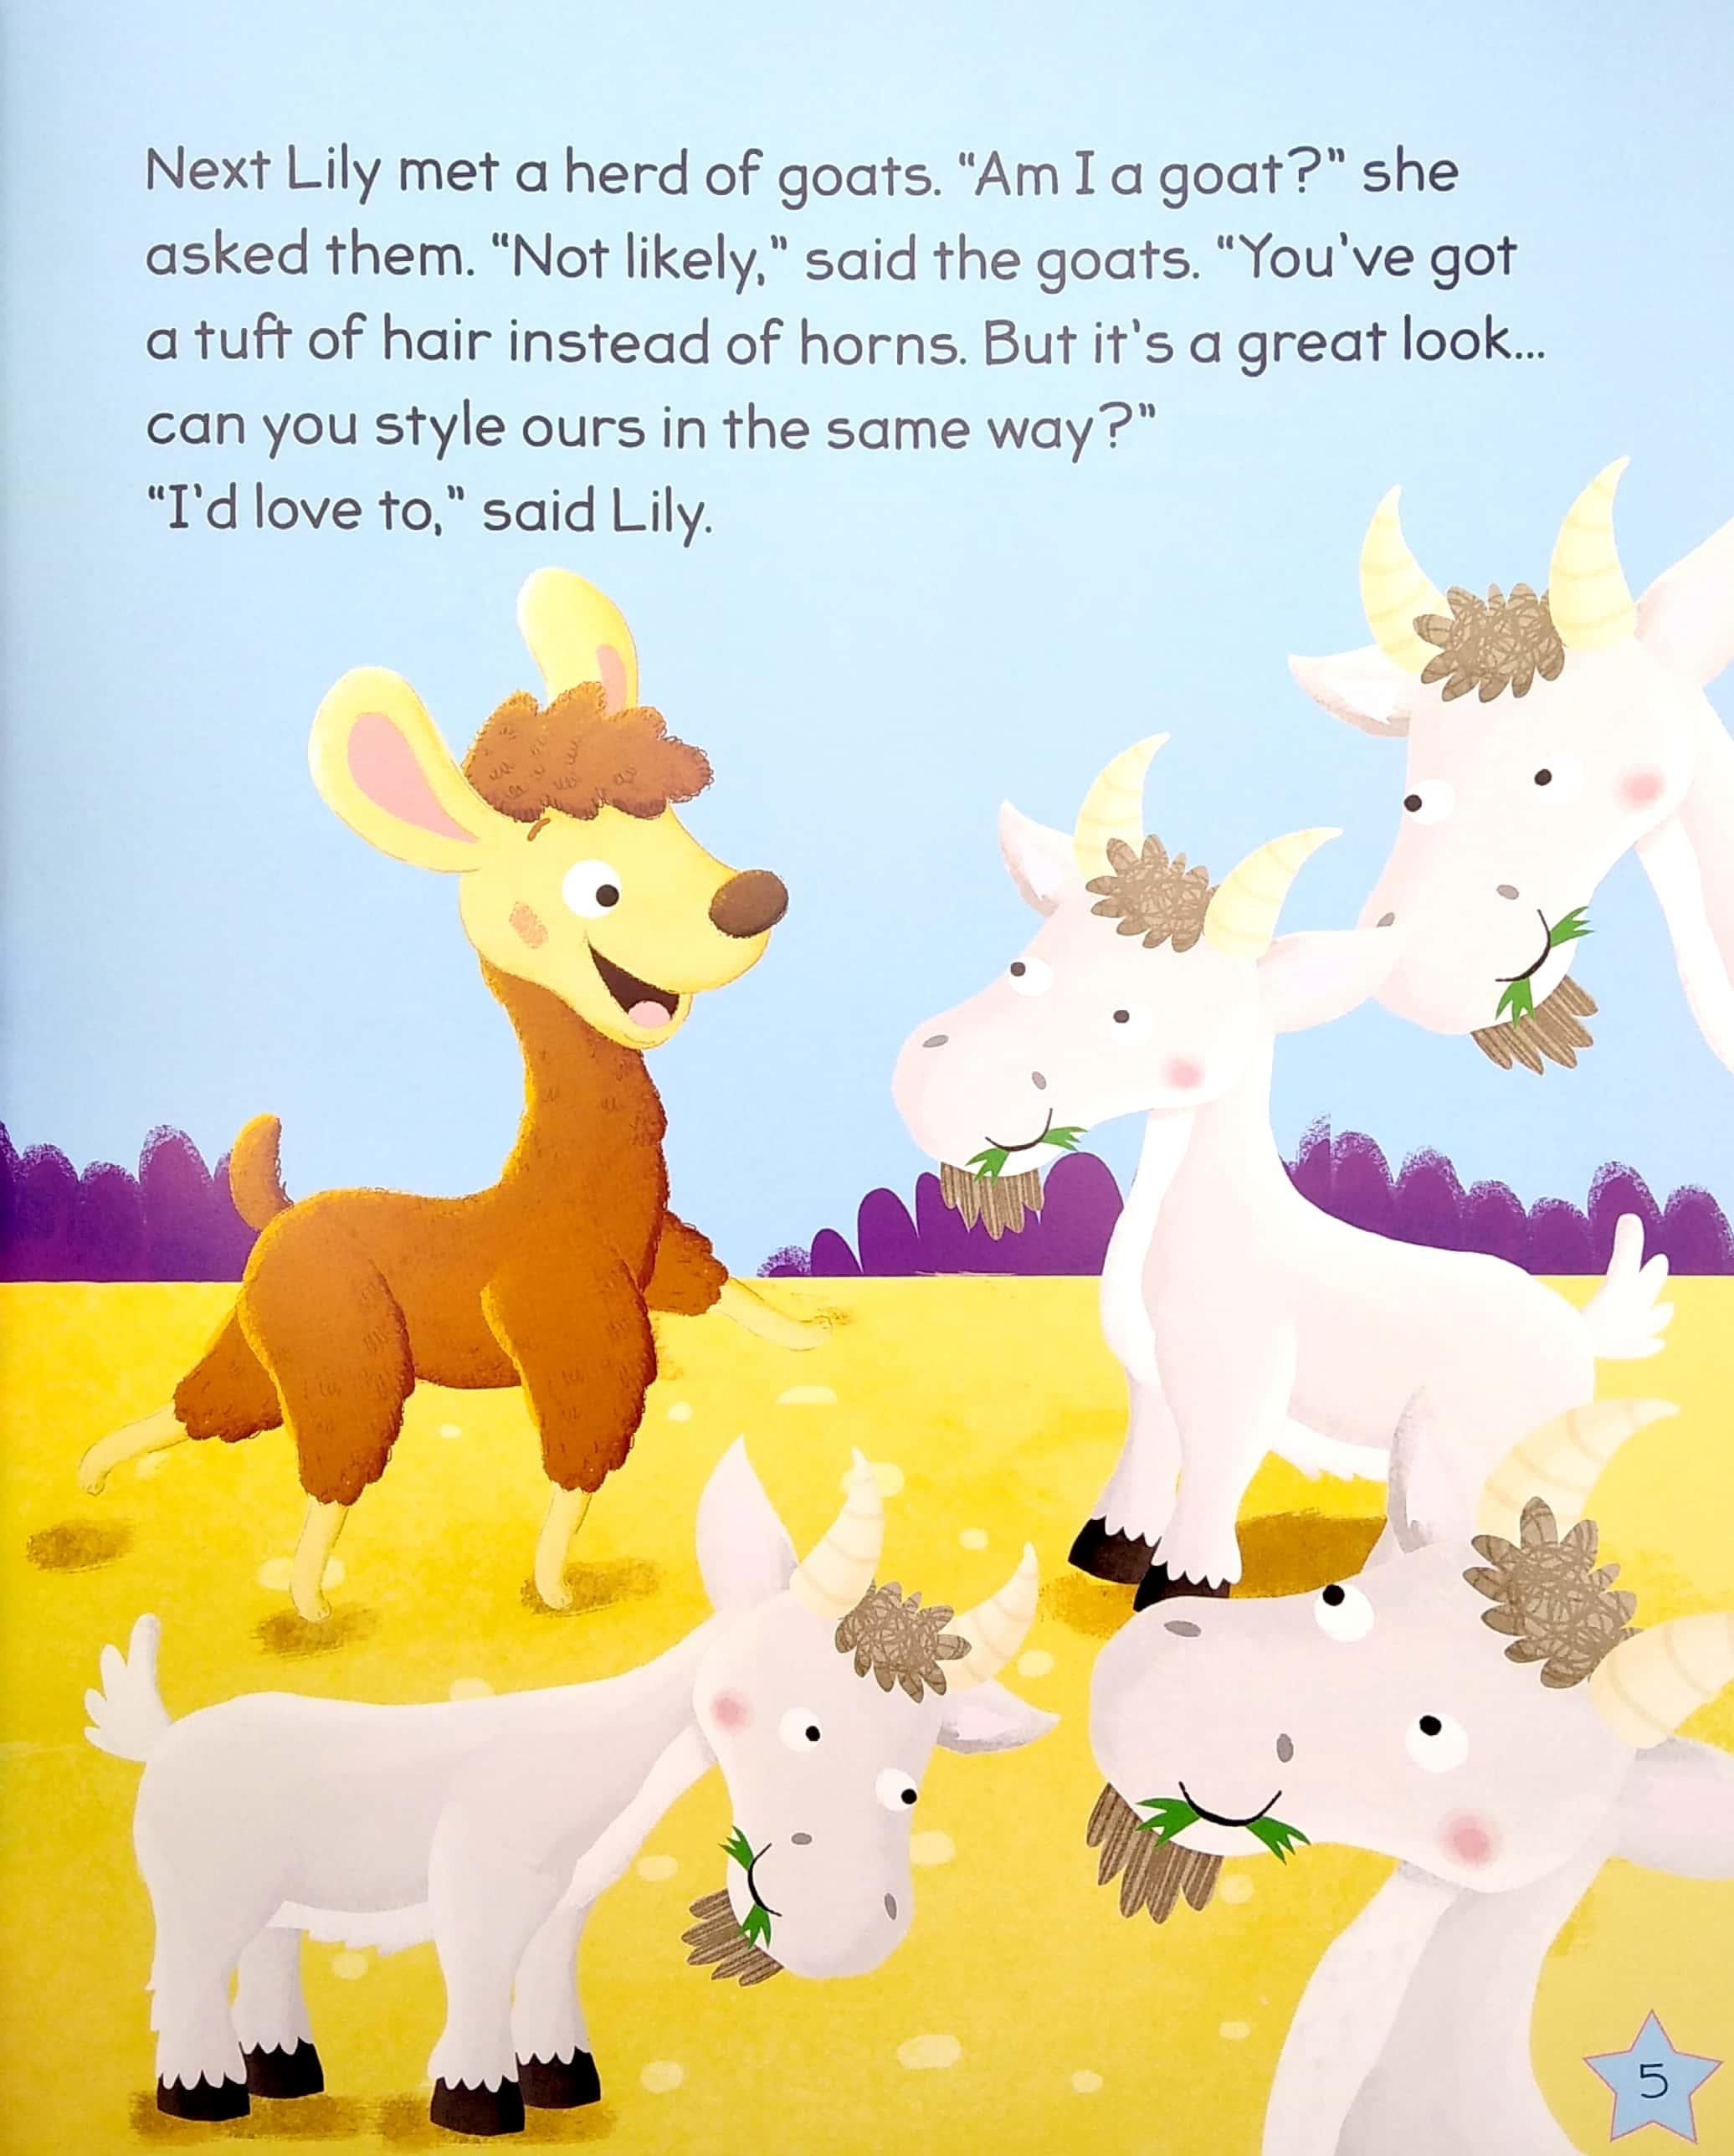 Illustrated Animal Stories